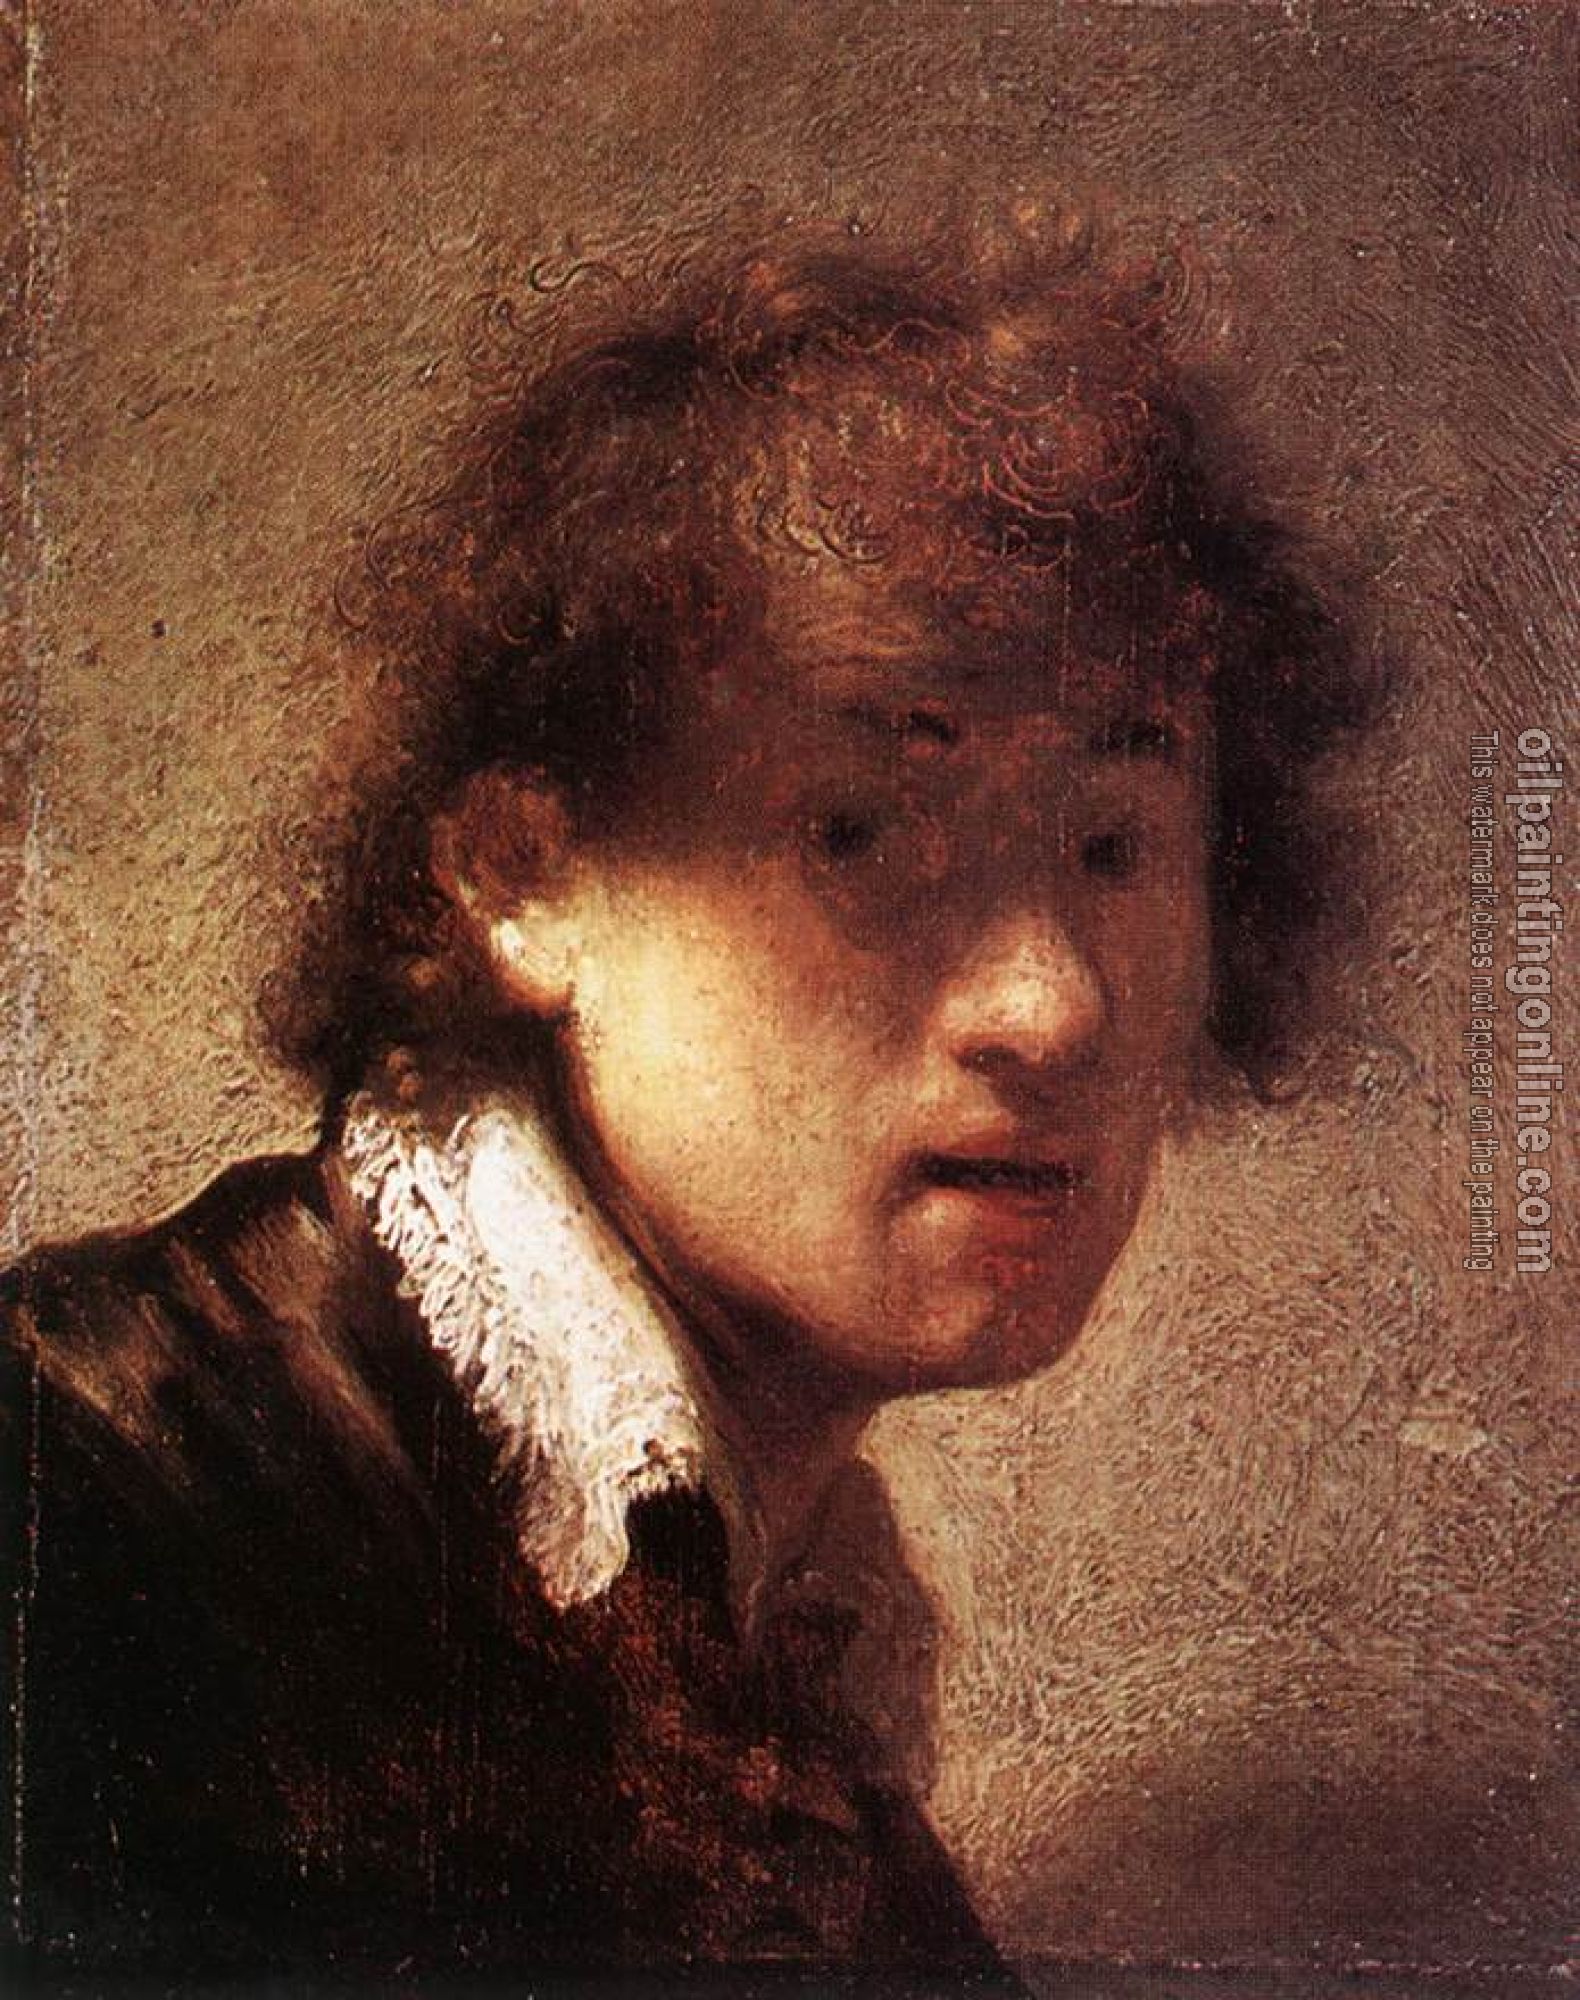 Rembrandt - Rembrandt oil painting